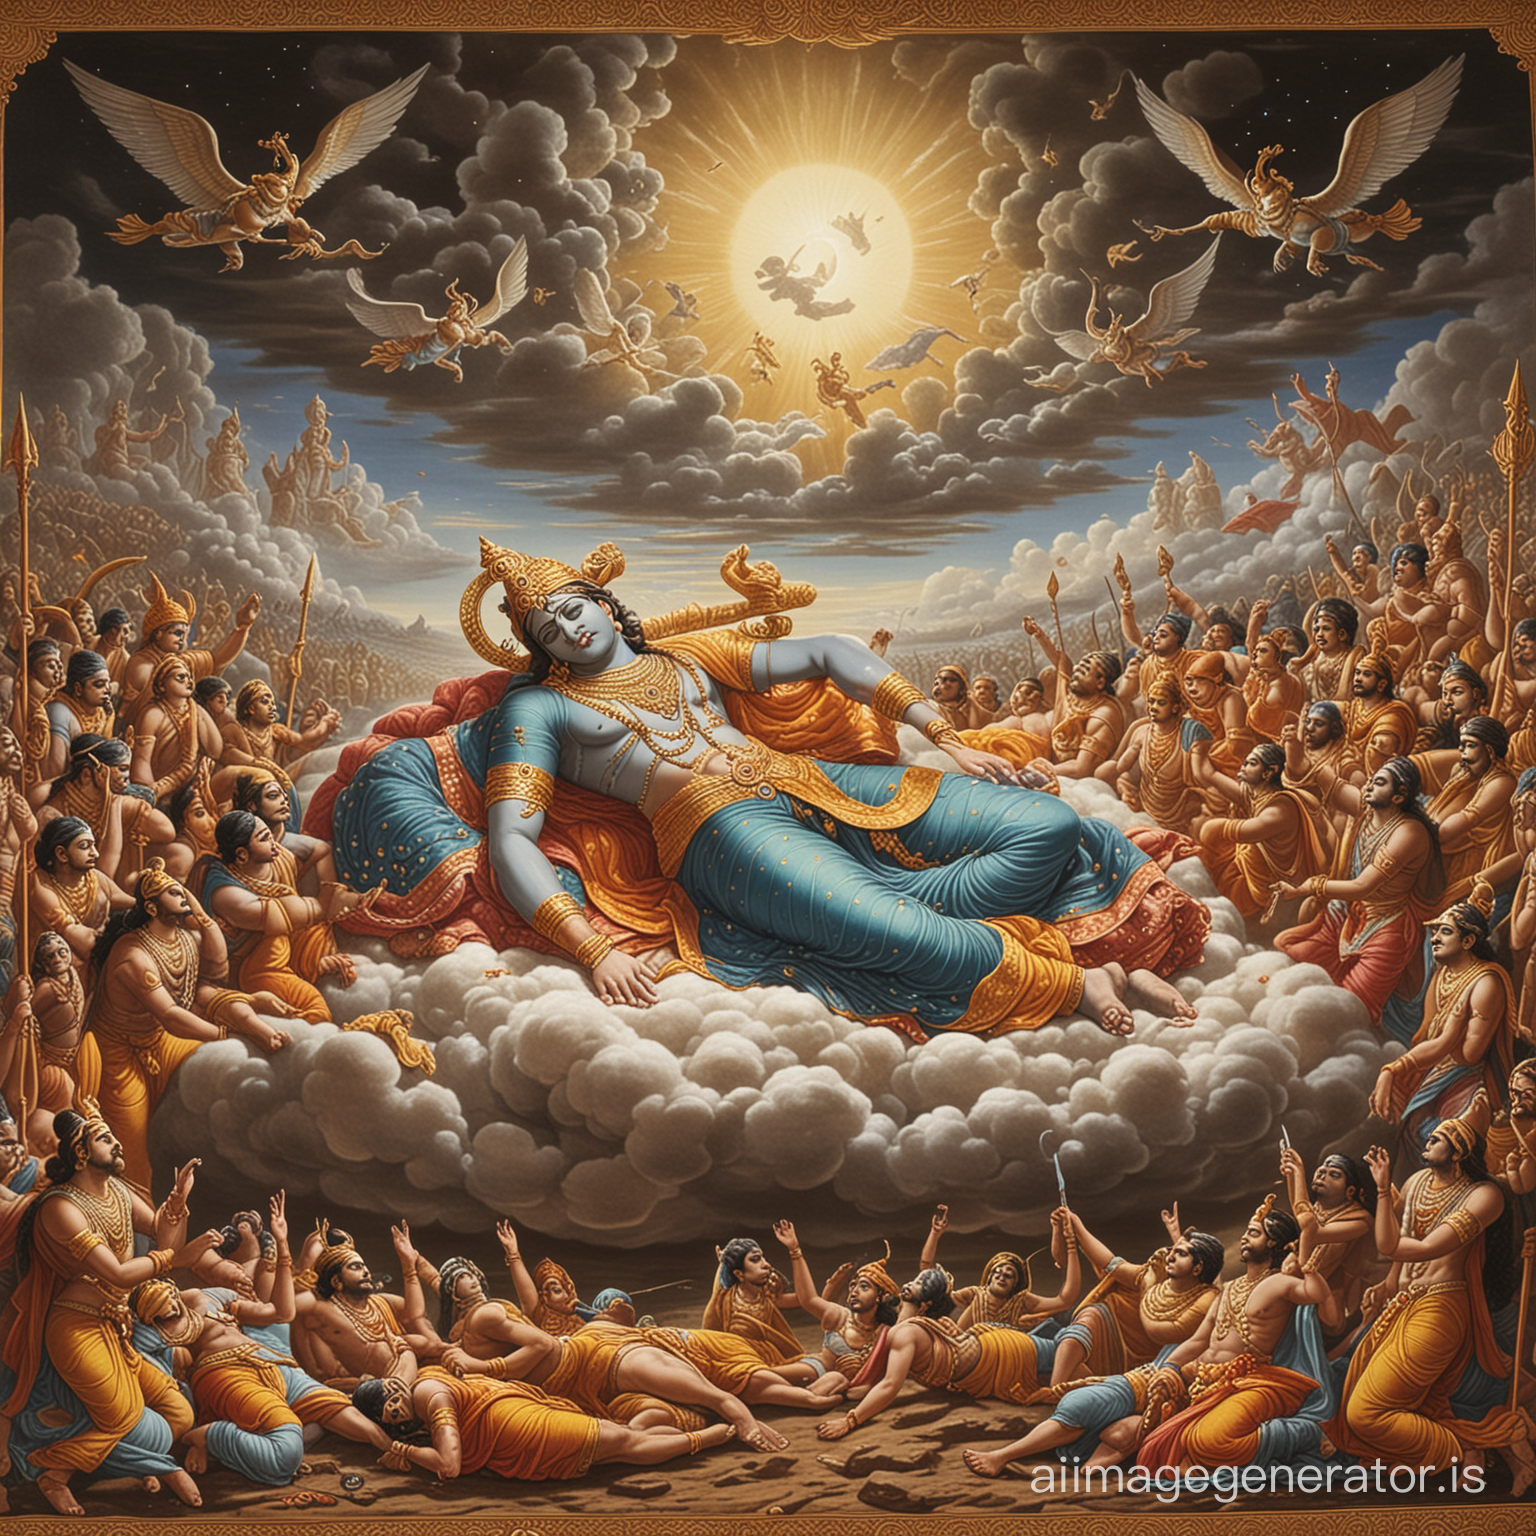 Lord Vishnu sleeping in war